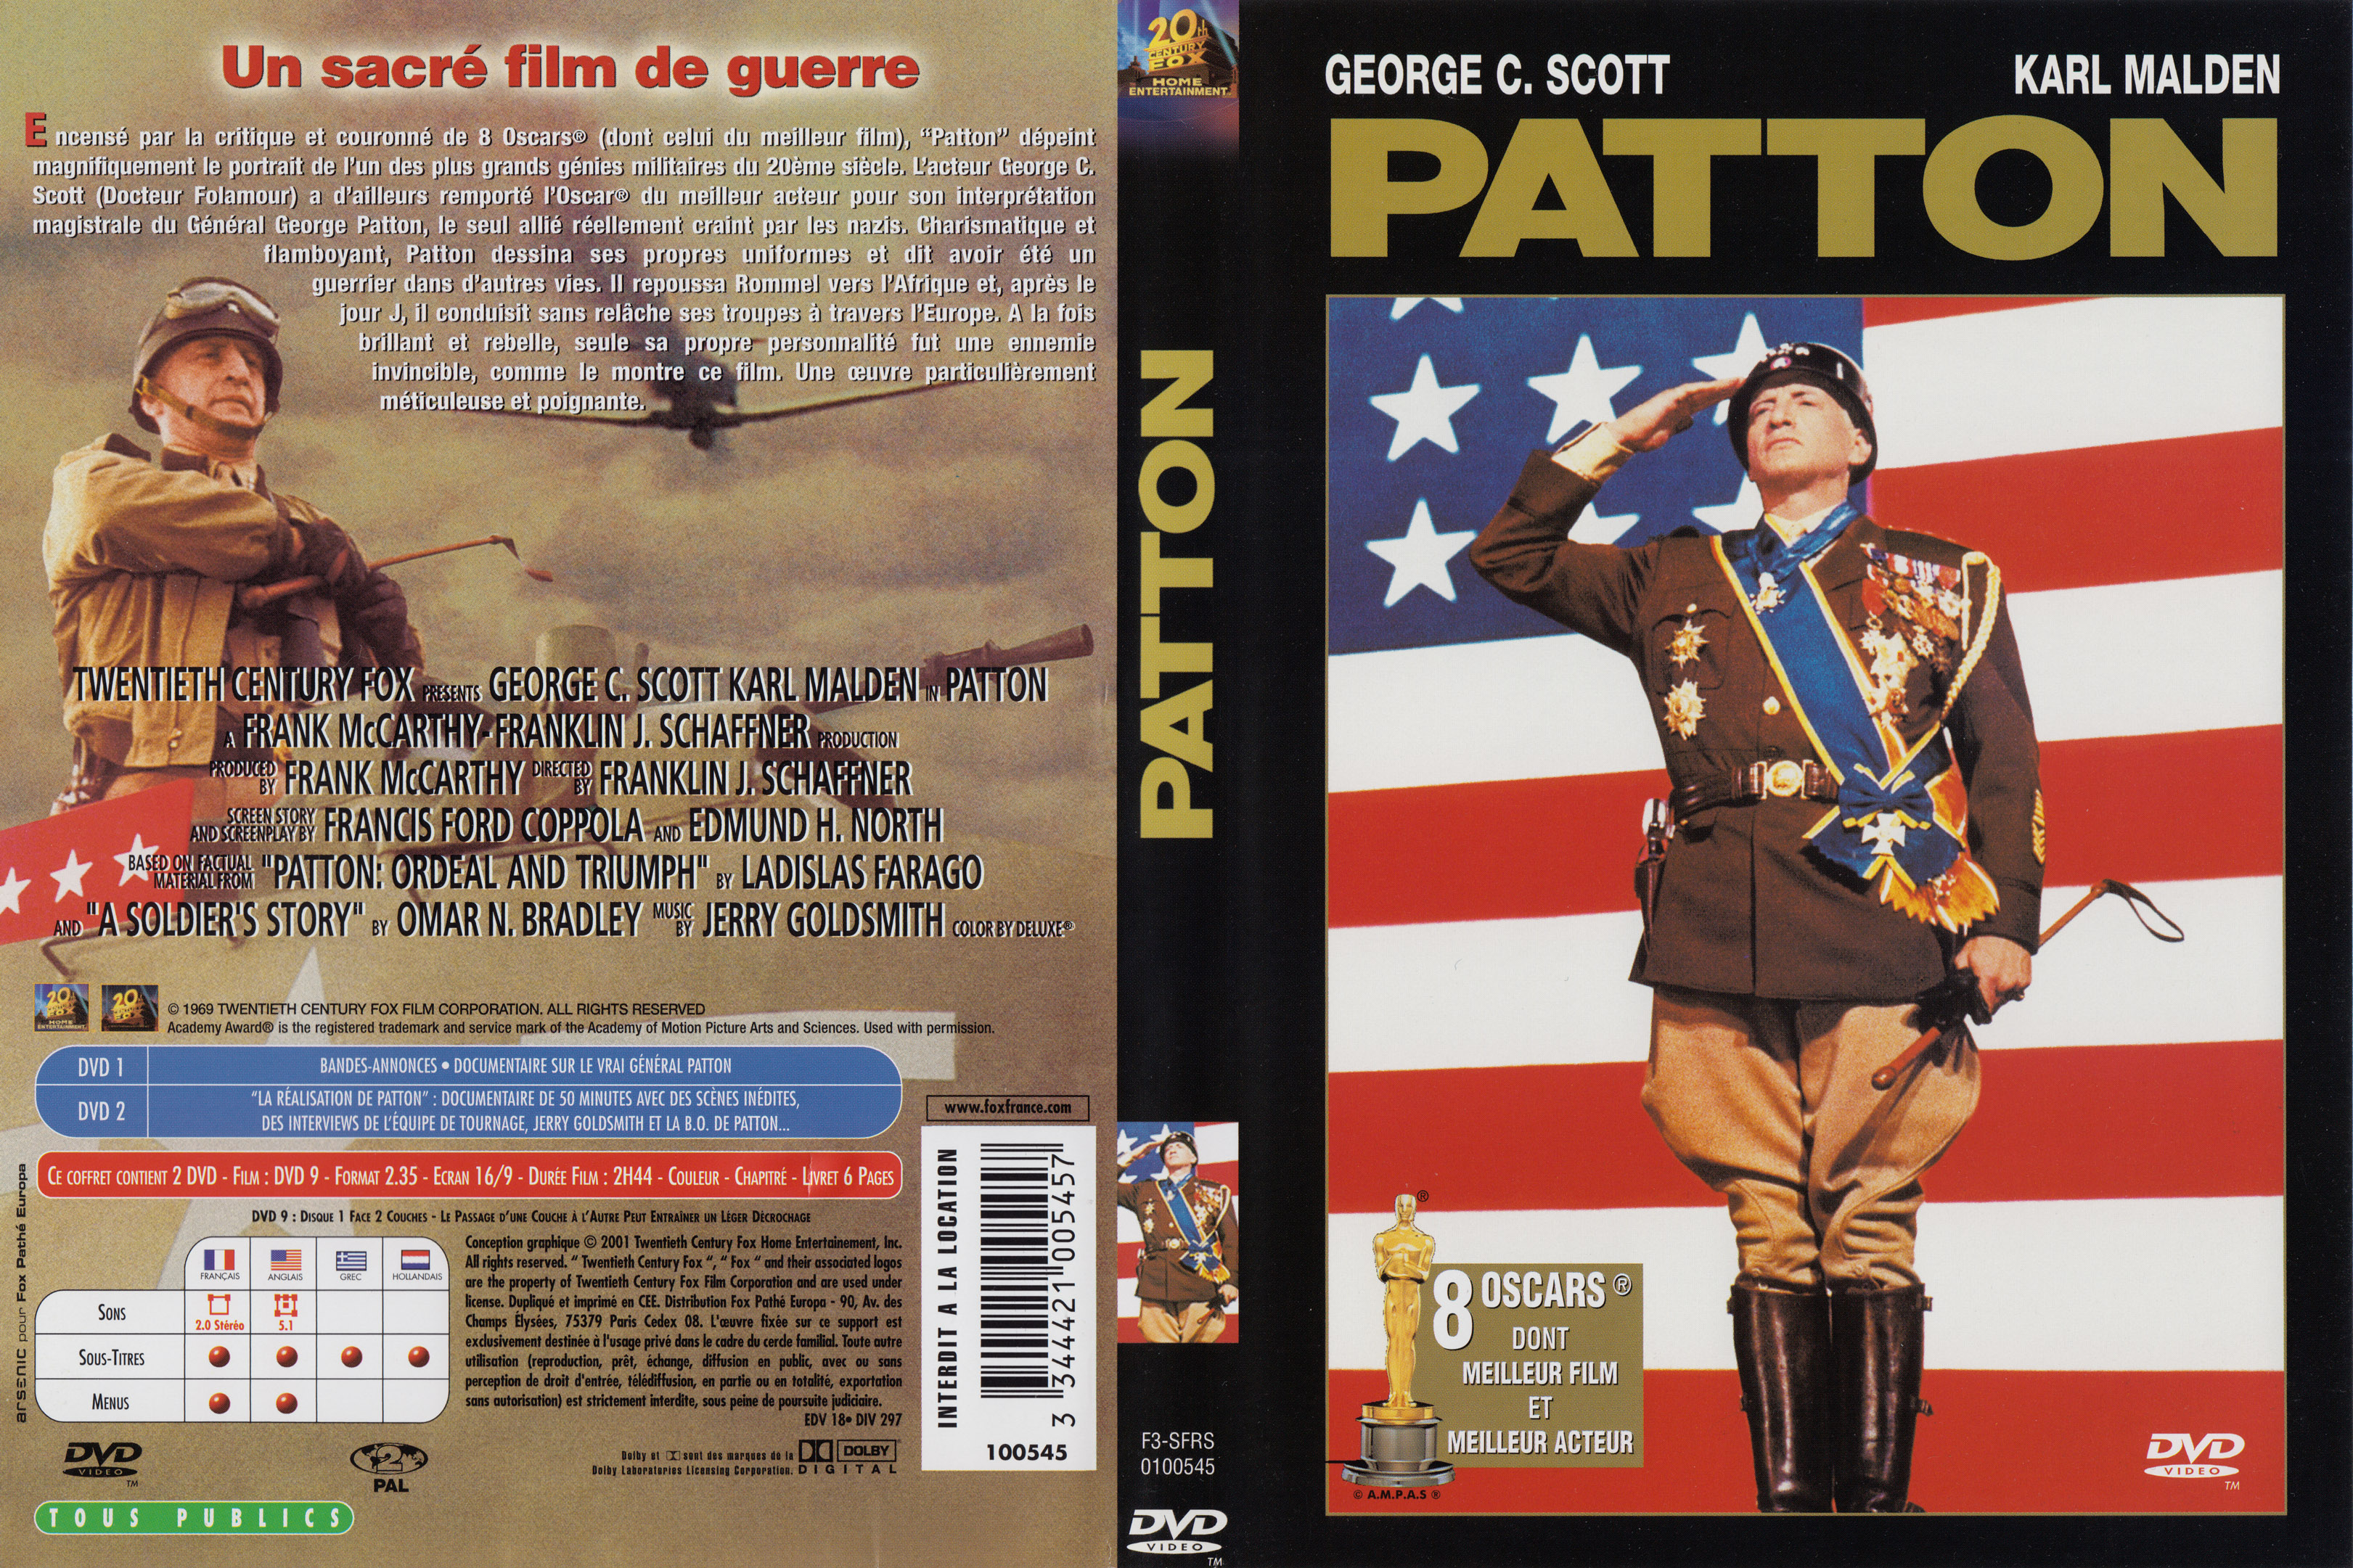 Jaquette DVD Patton v4